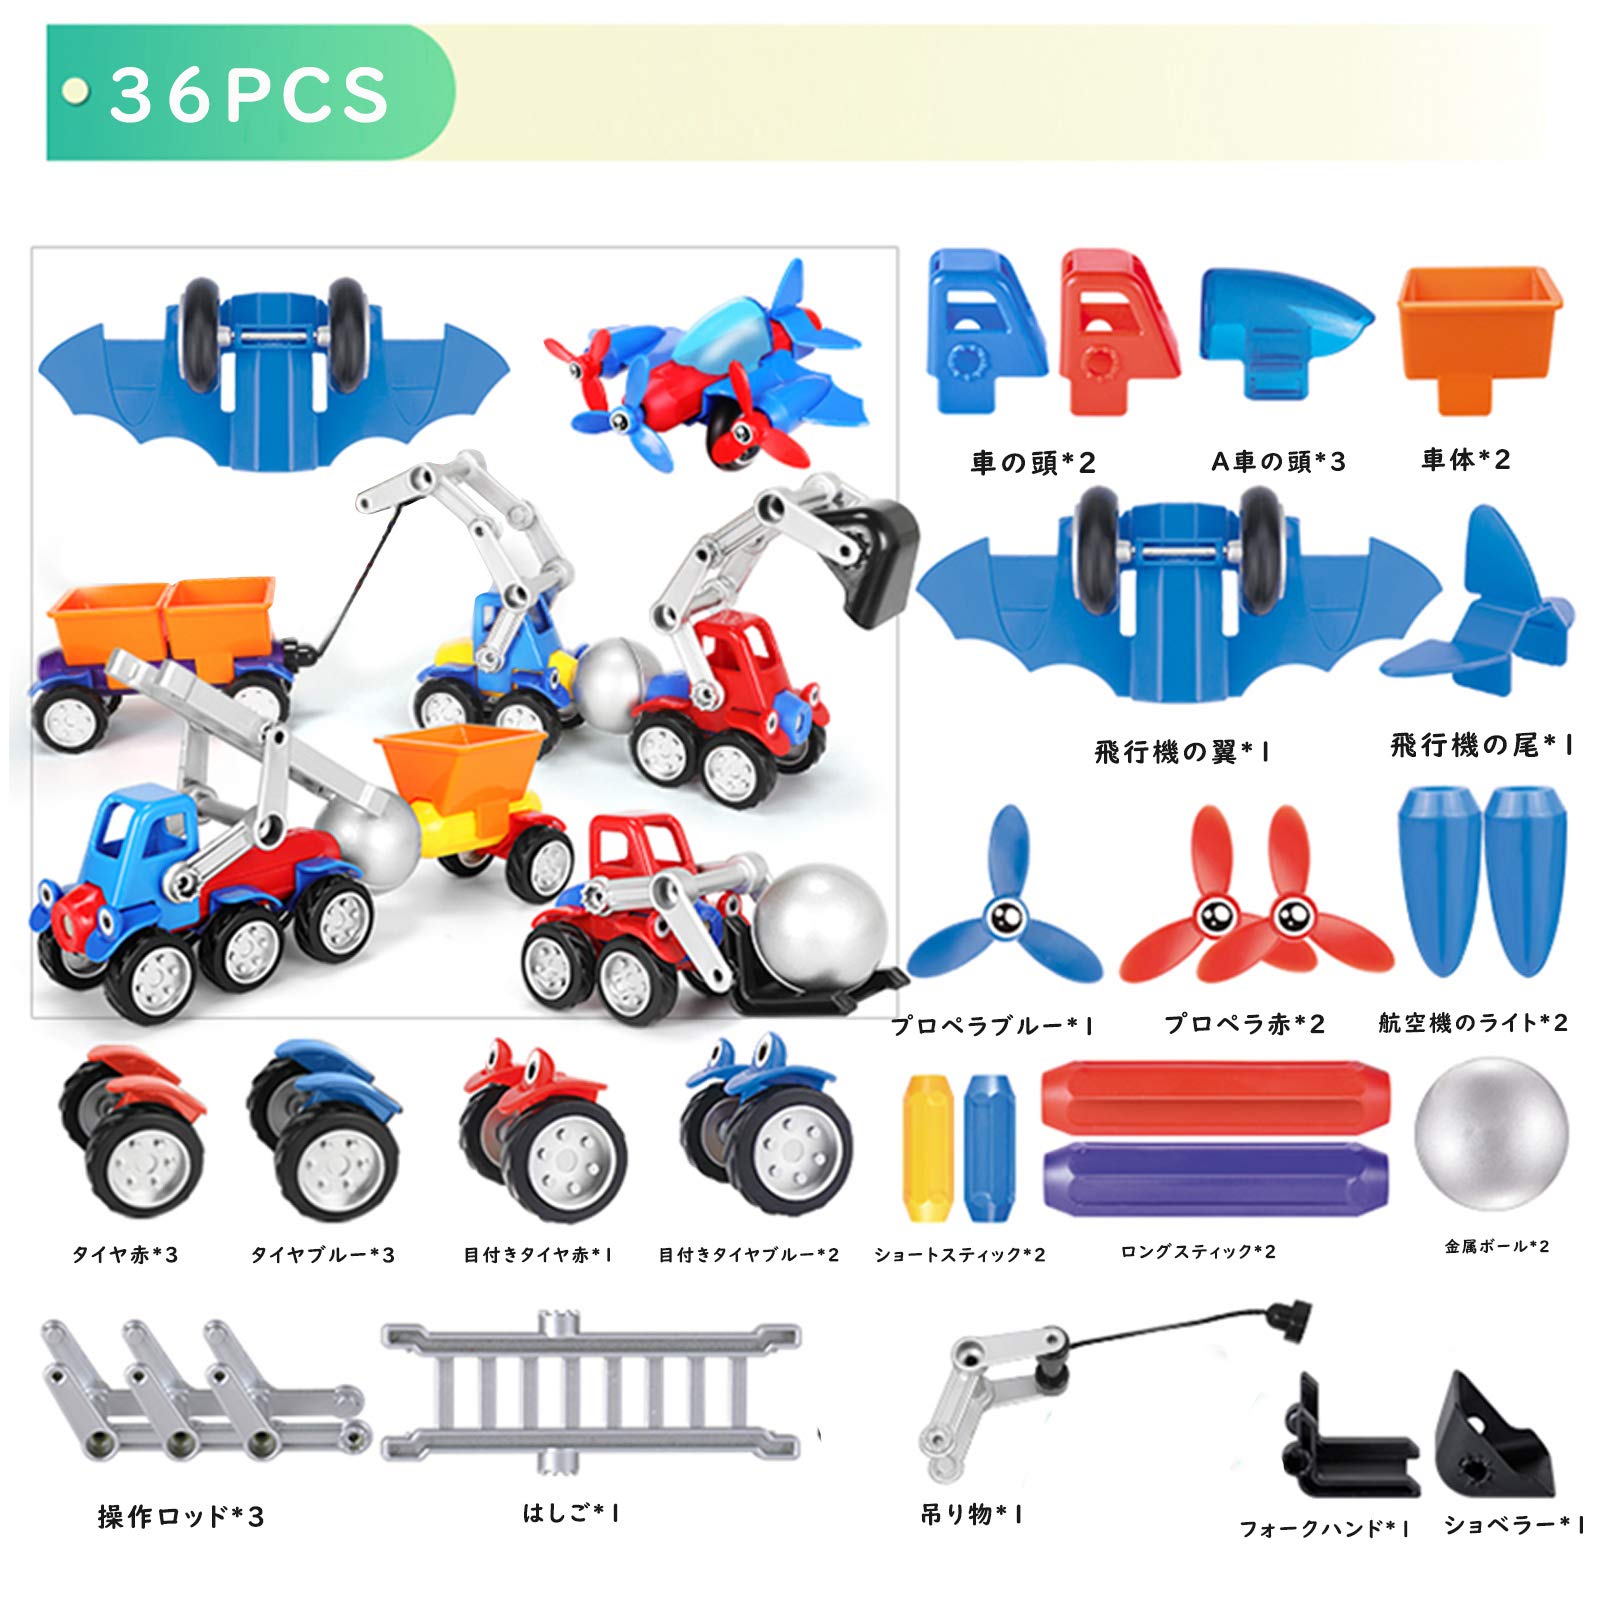 36pcsDIYカーおもちゃ組み立て飛行機セット収納ケース付き知育玩具